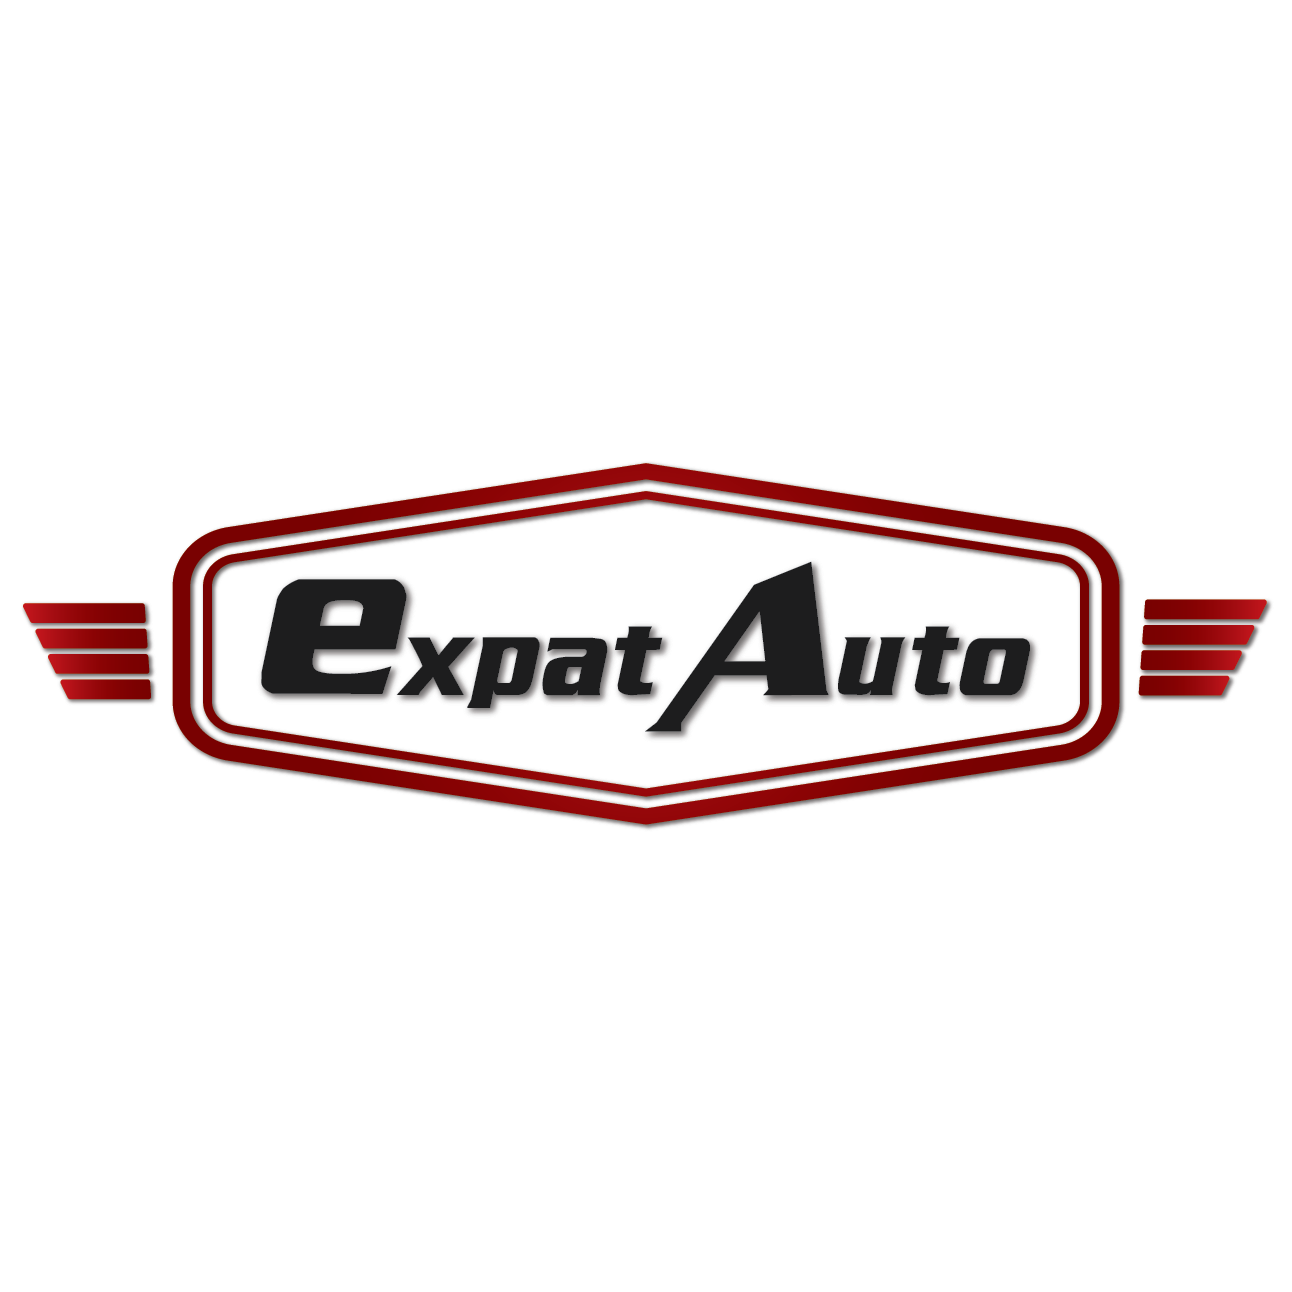 Expat Auto เอ็กซ์แพท ออโต้ จำกัด